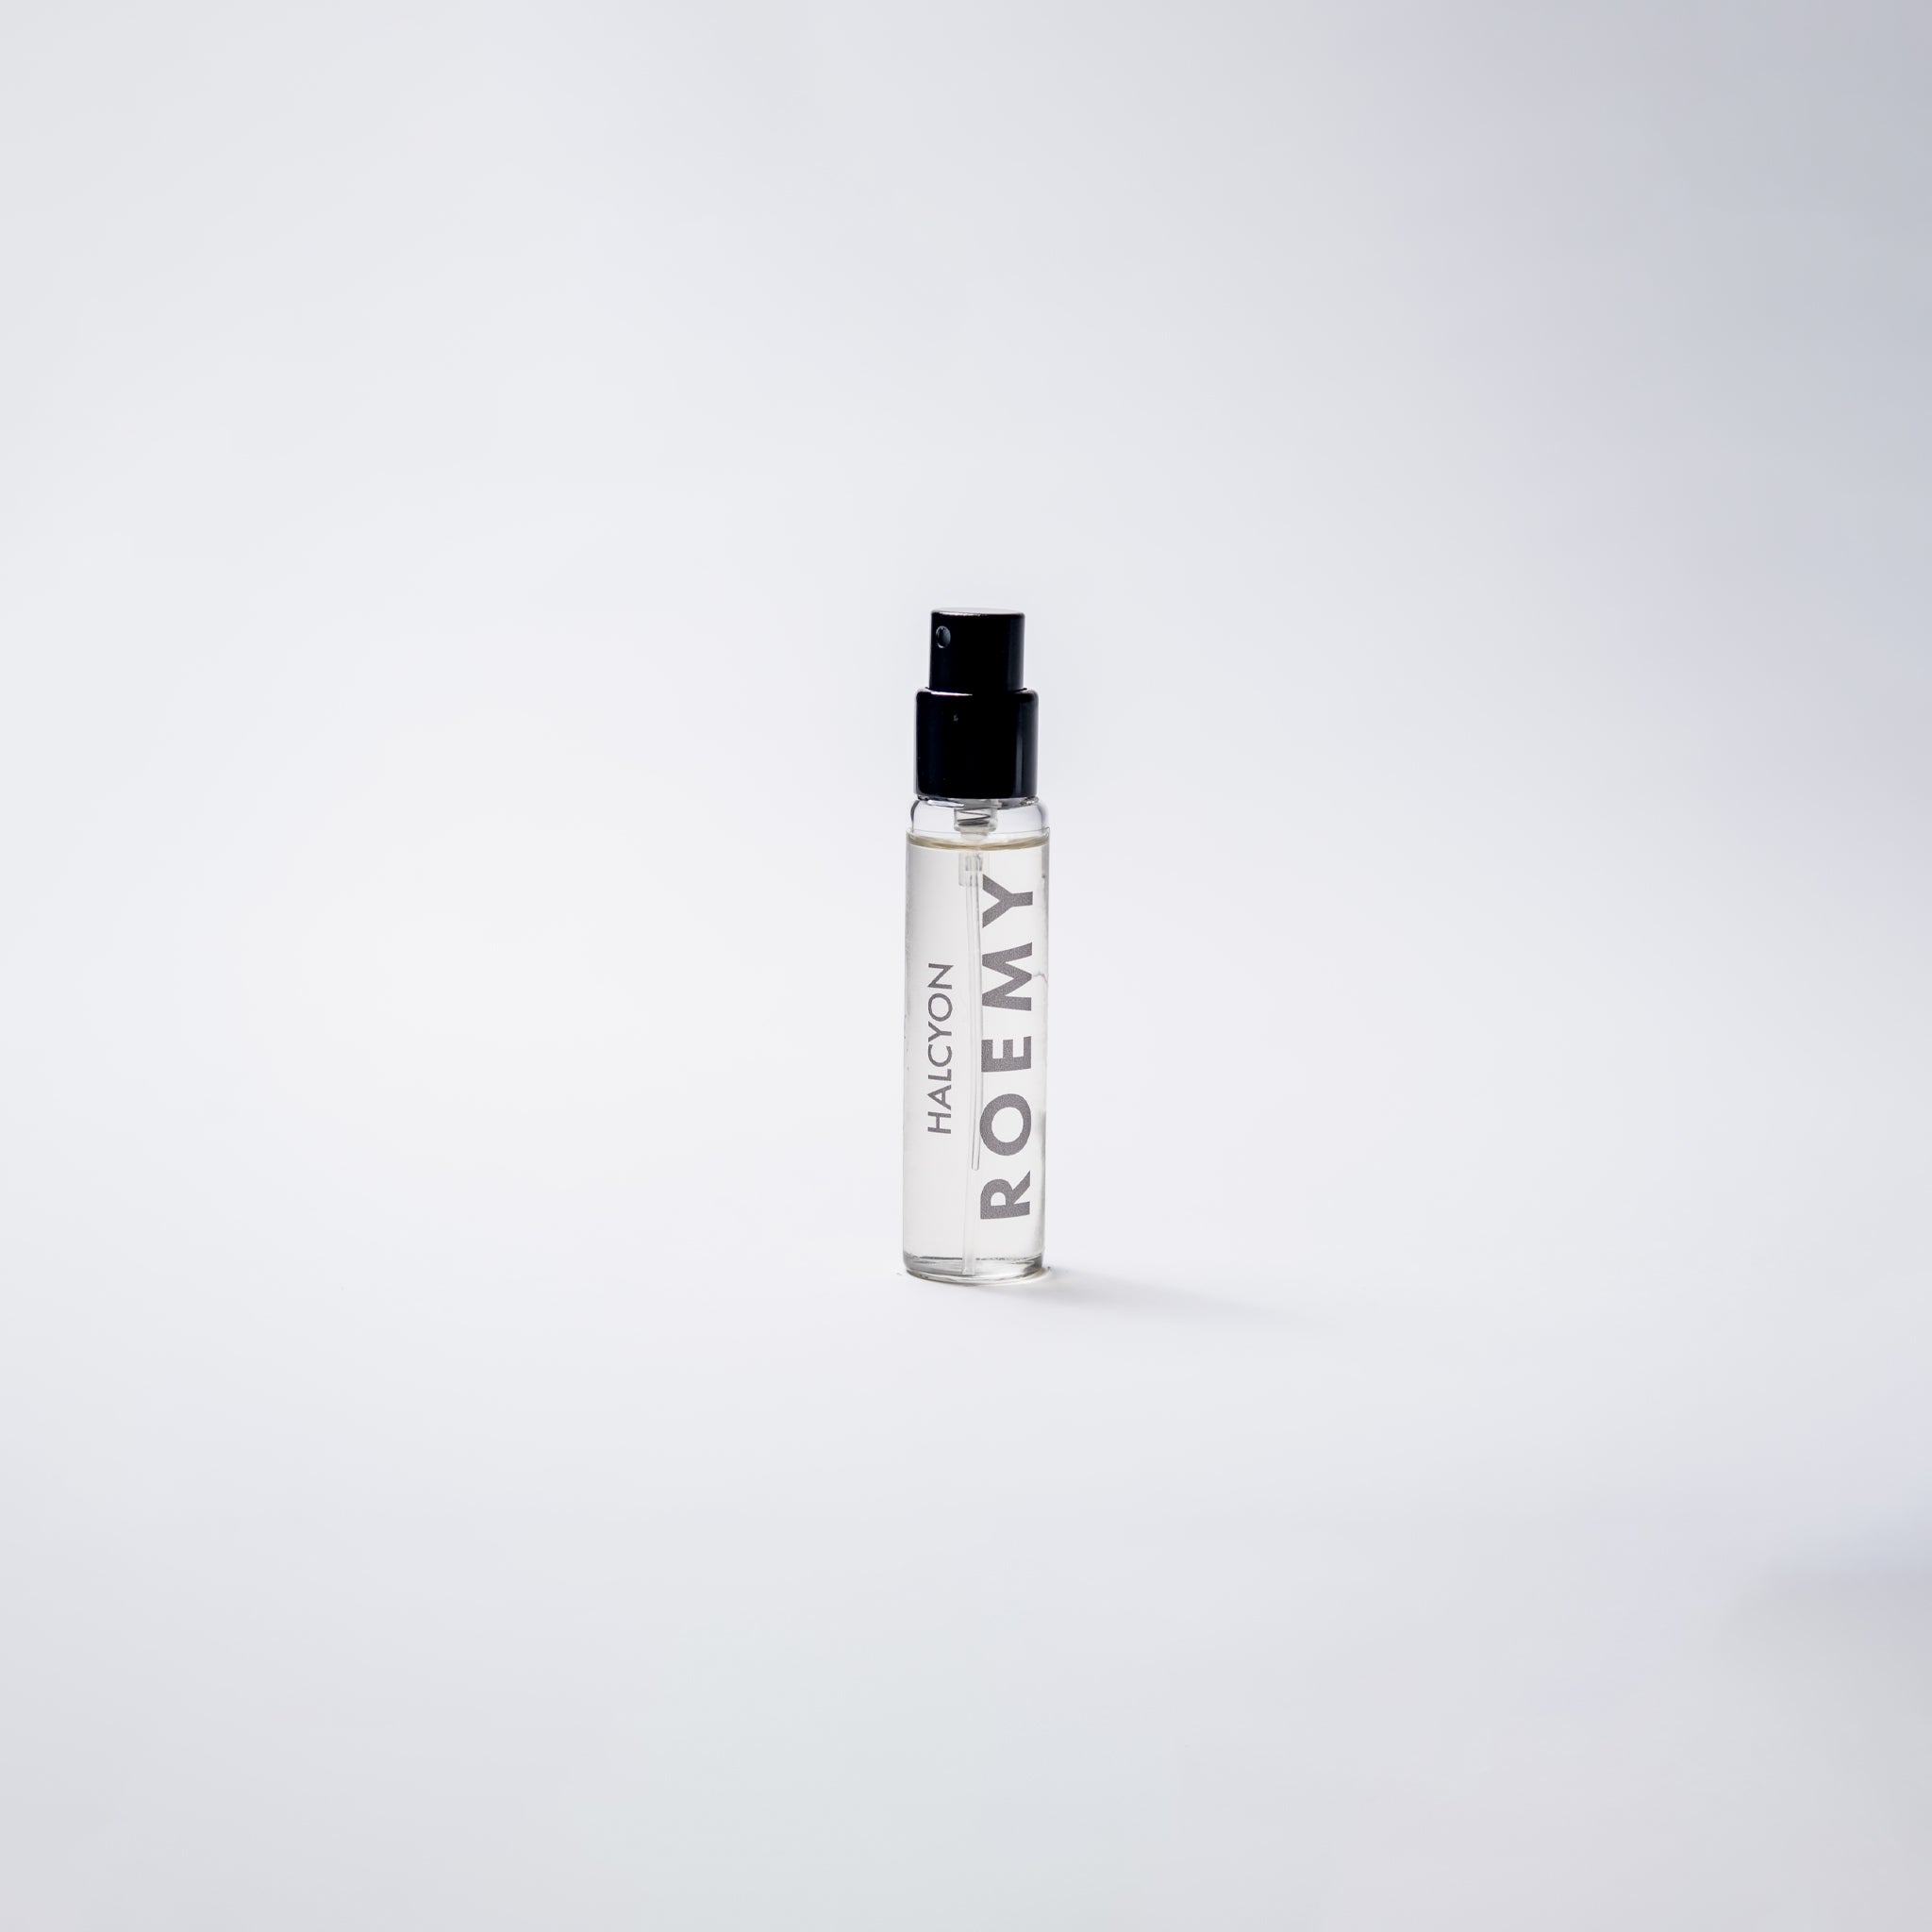 ROEMY Halcyon 15mL Traveller Parfum - front